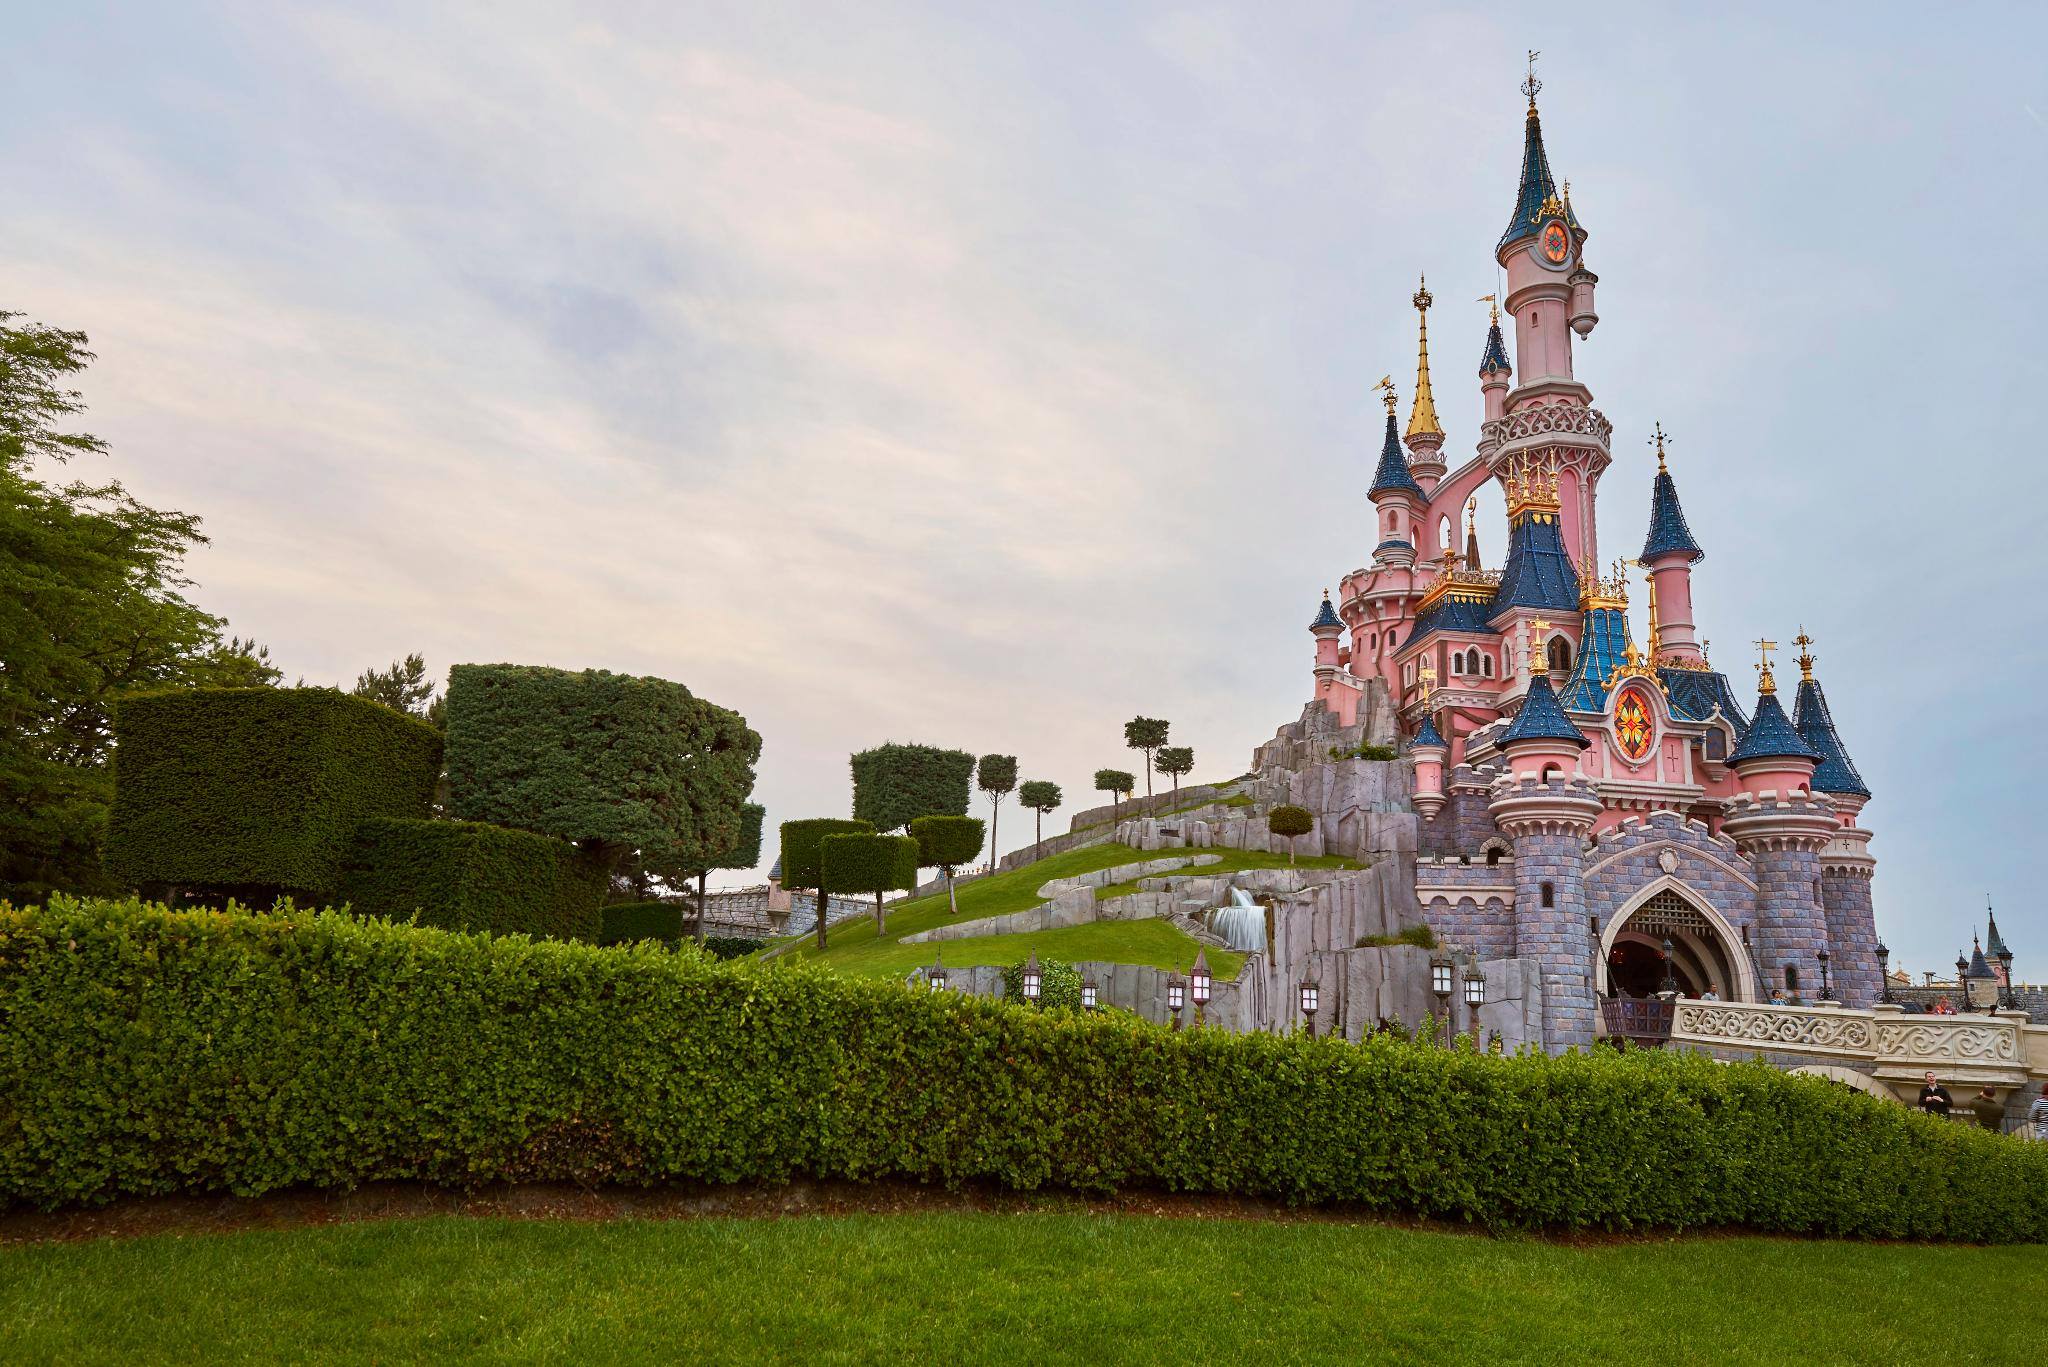 Disneyland Paris to Remain Closed until Further Notice